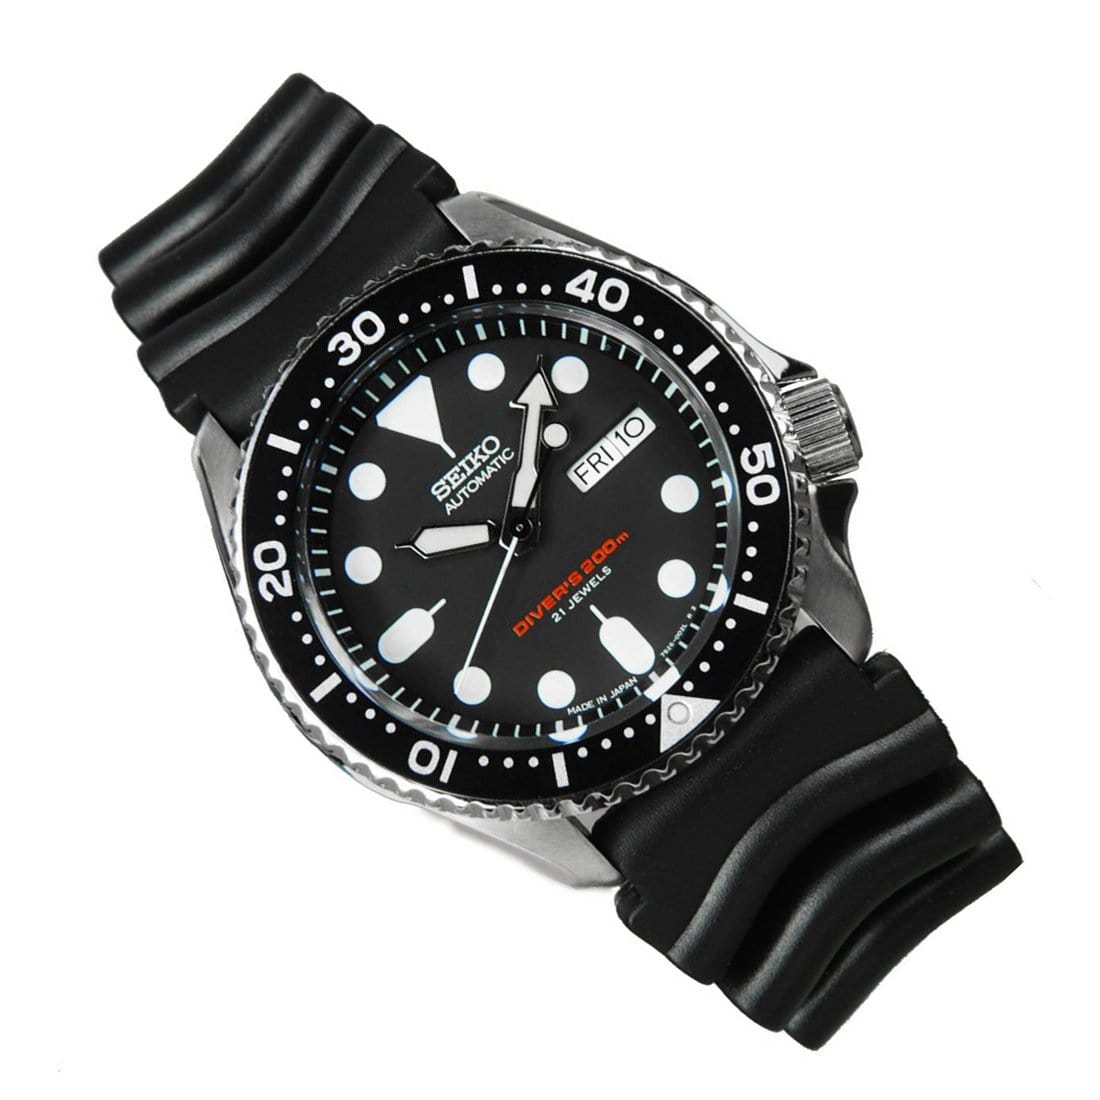 Seiko Japan Made Automatic Dive Watch SKX007 SKX007J1